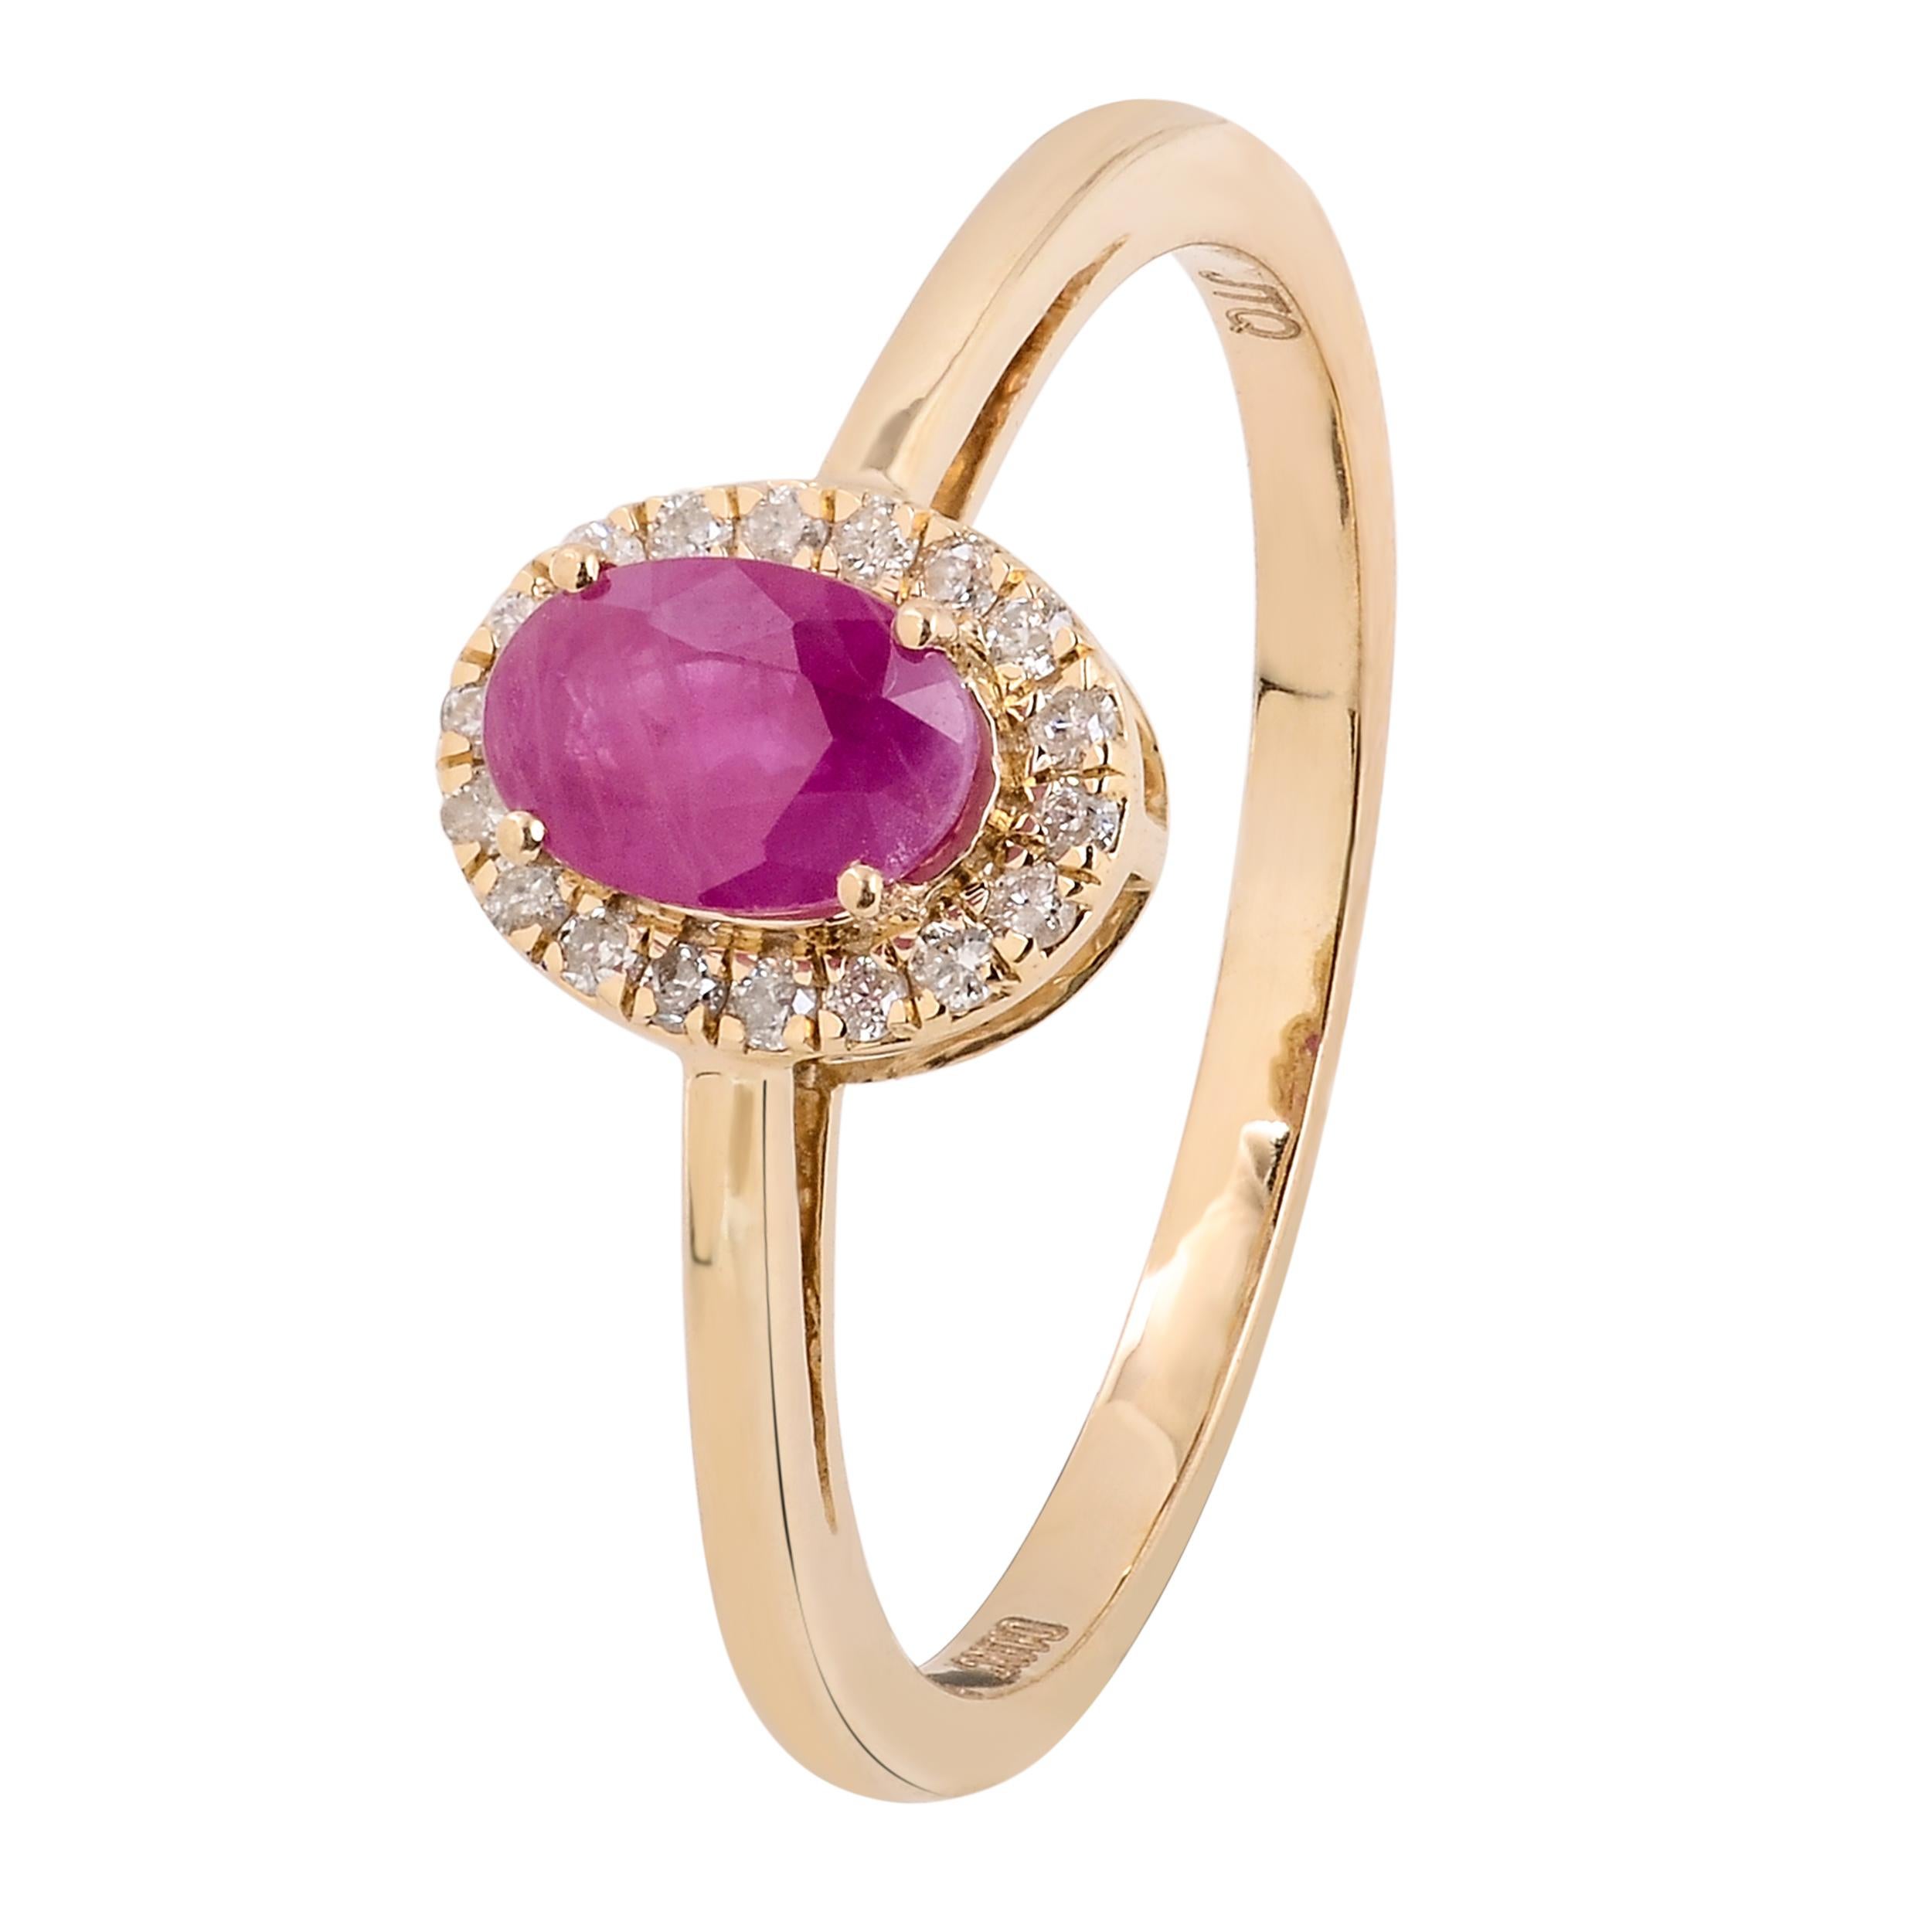 Elegant 14K Ruby & Diamond Cocktail Ring, Size 7 - Statement Jewelry Piece For Sale 1